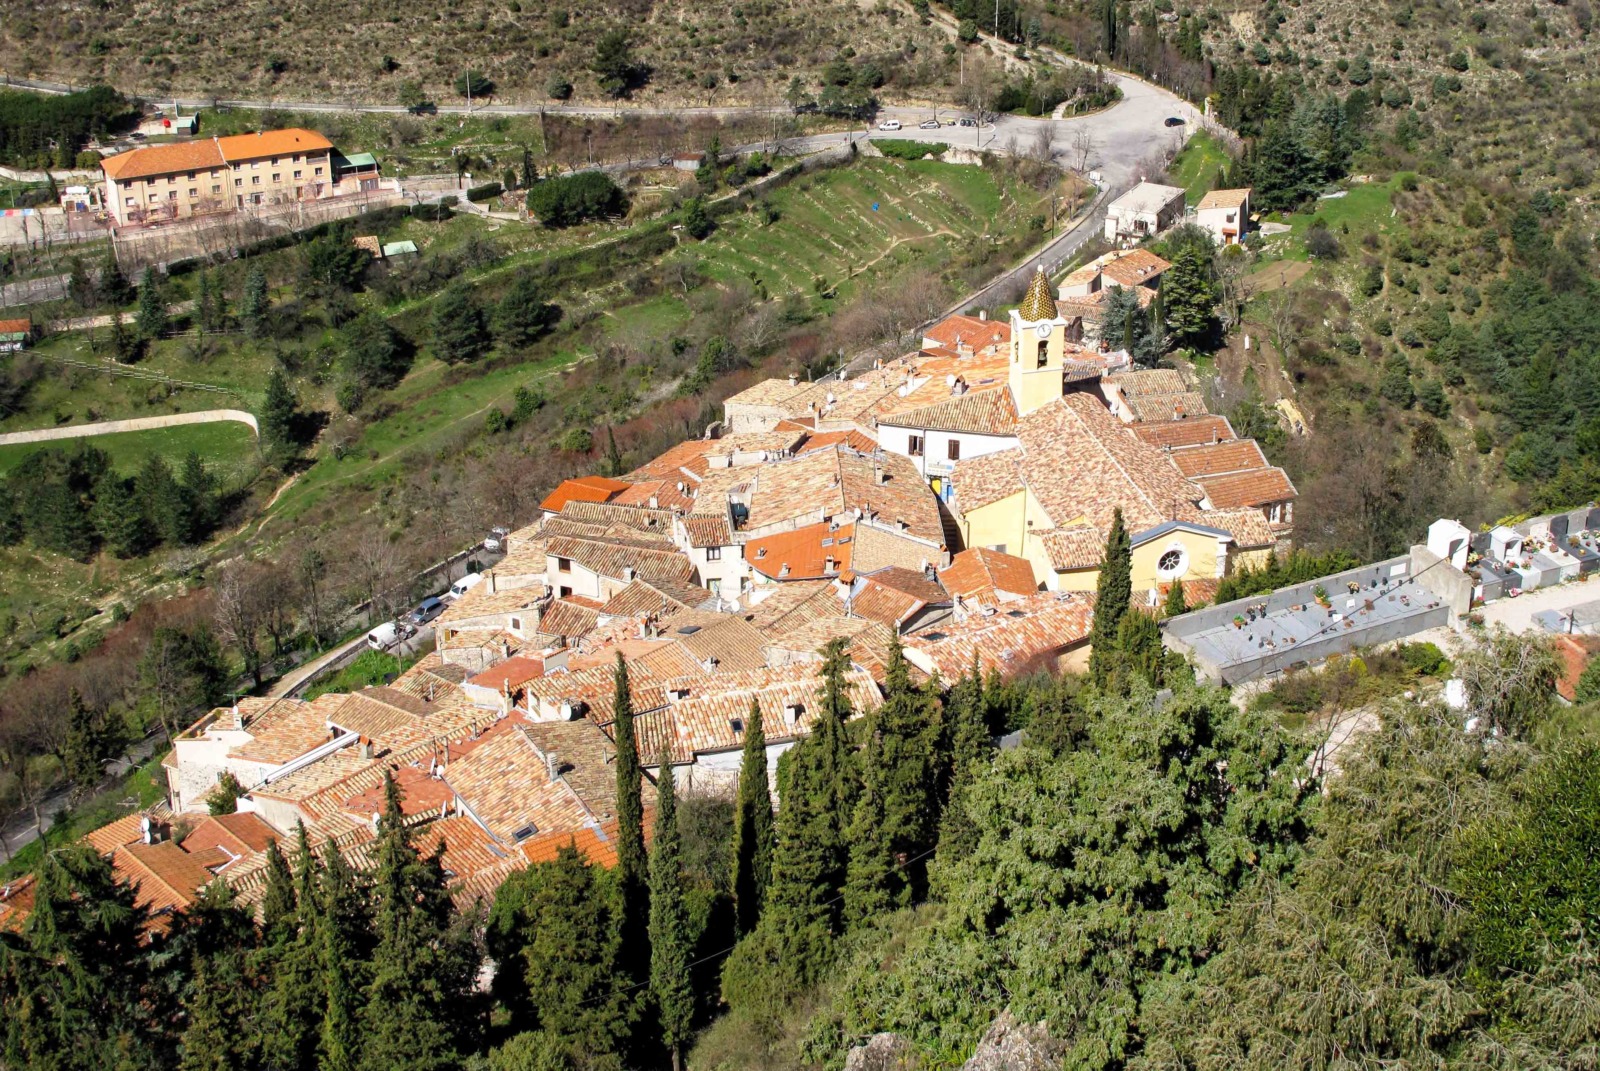 Upper view of the village. Photo: Tangopaso (Public Domain)